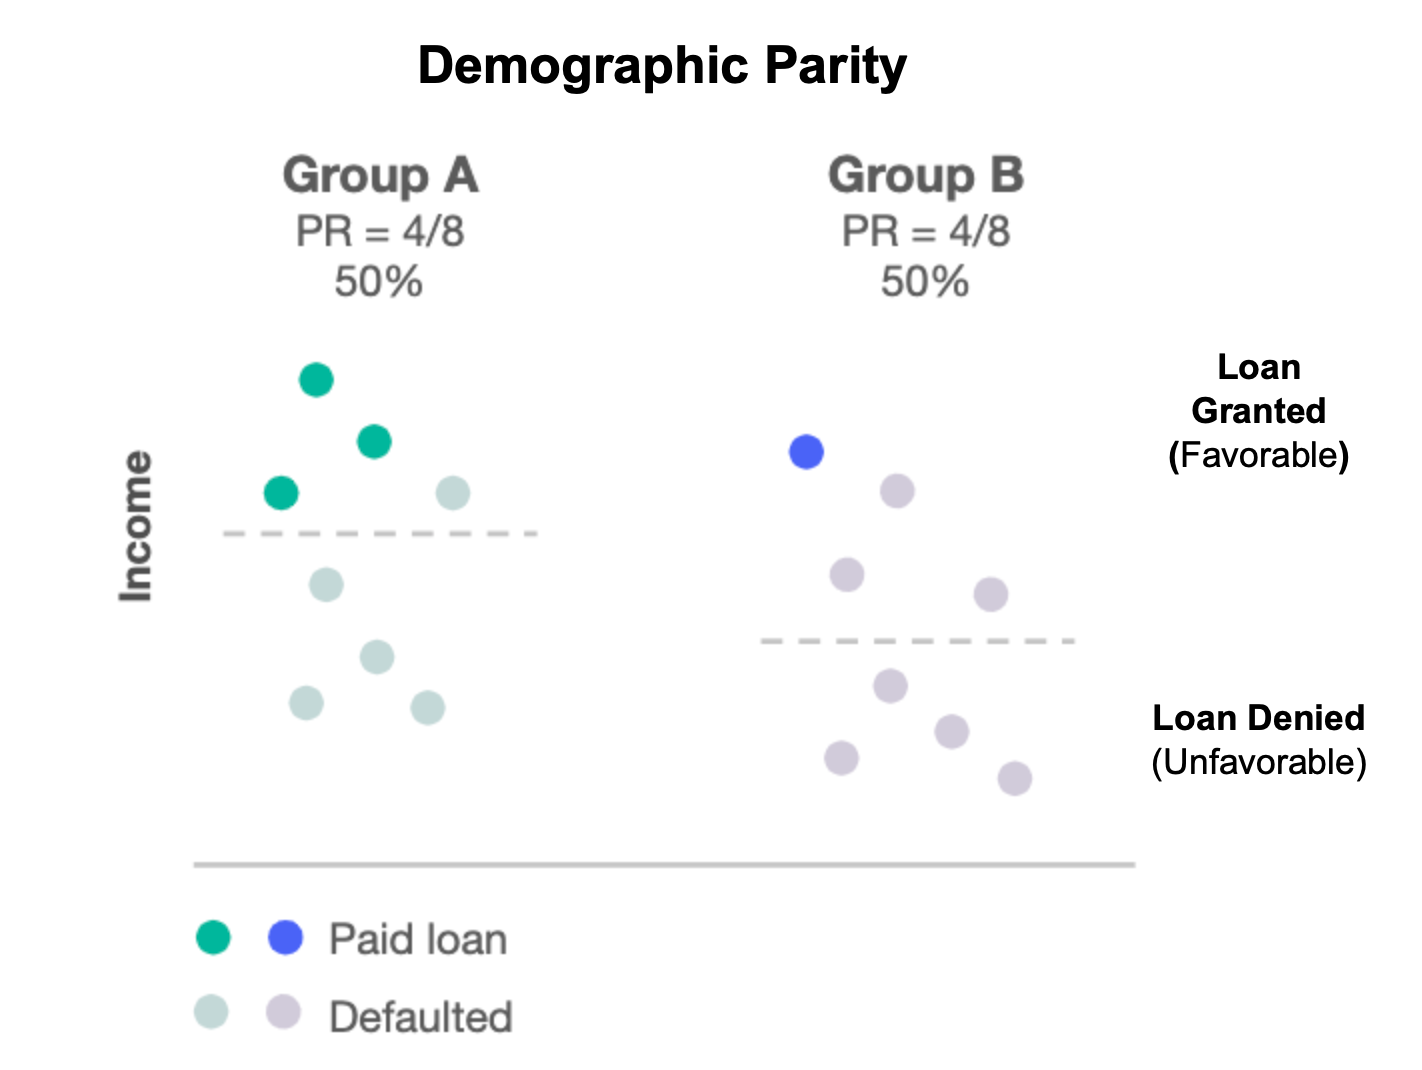 Demographic disparity depiction